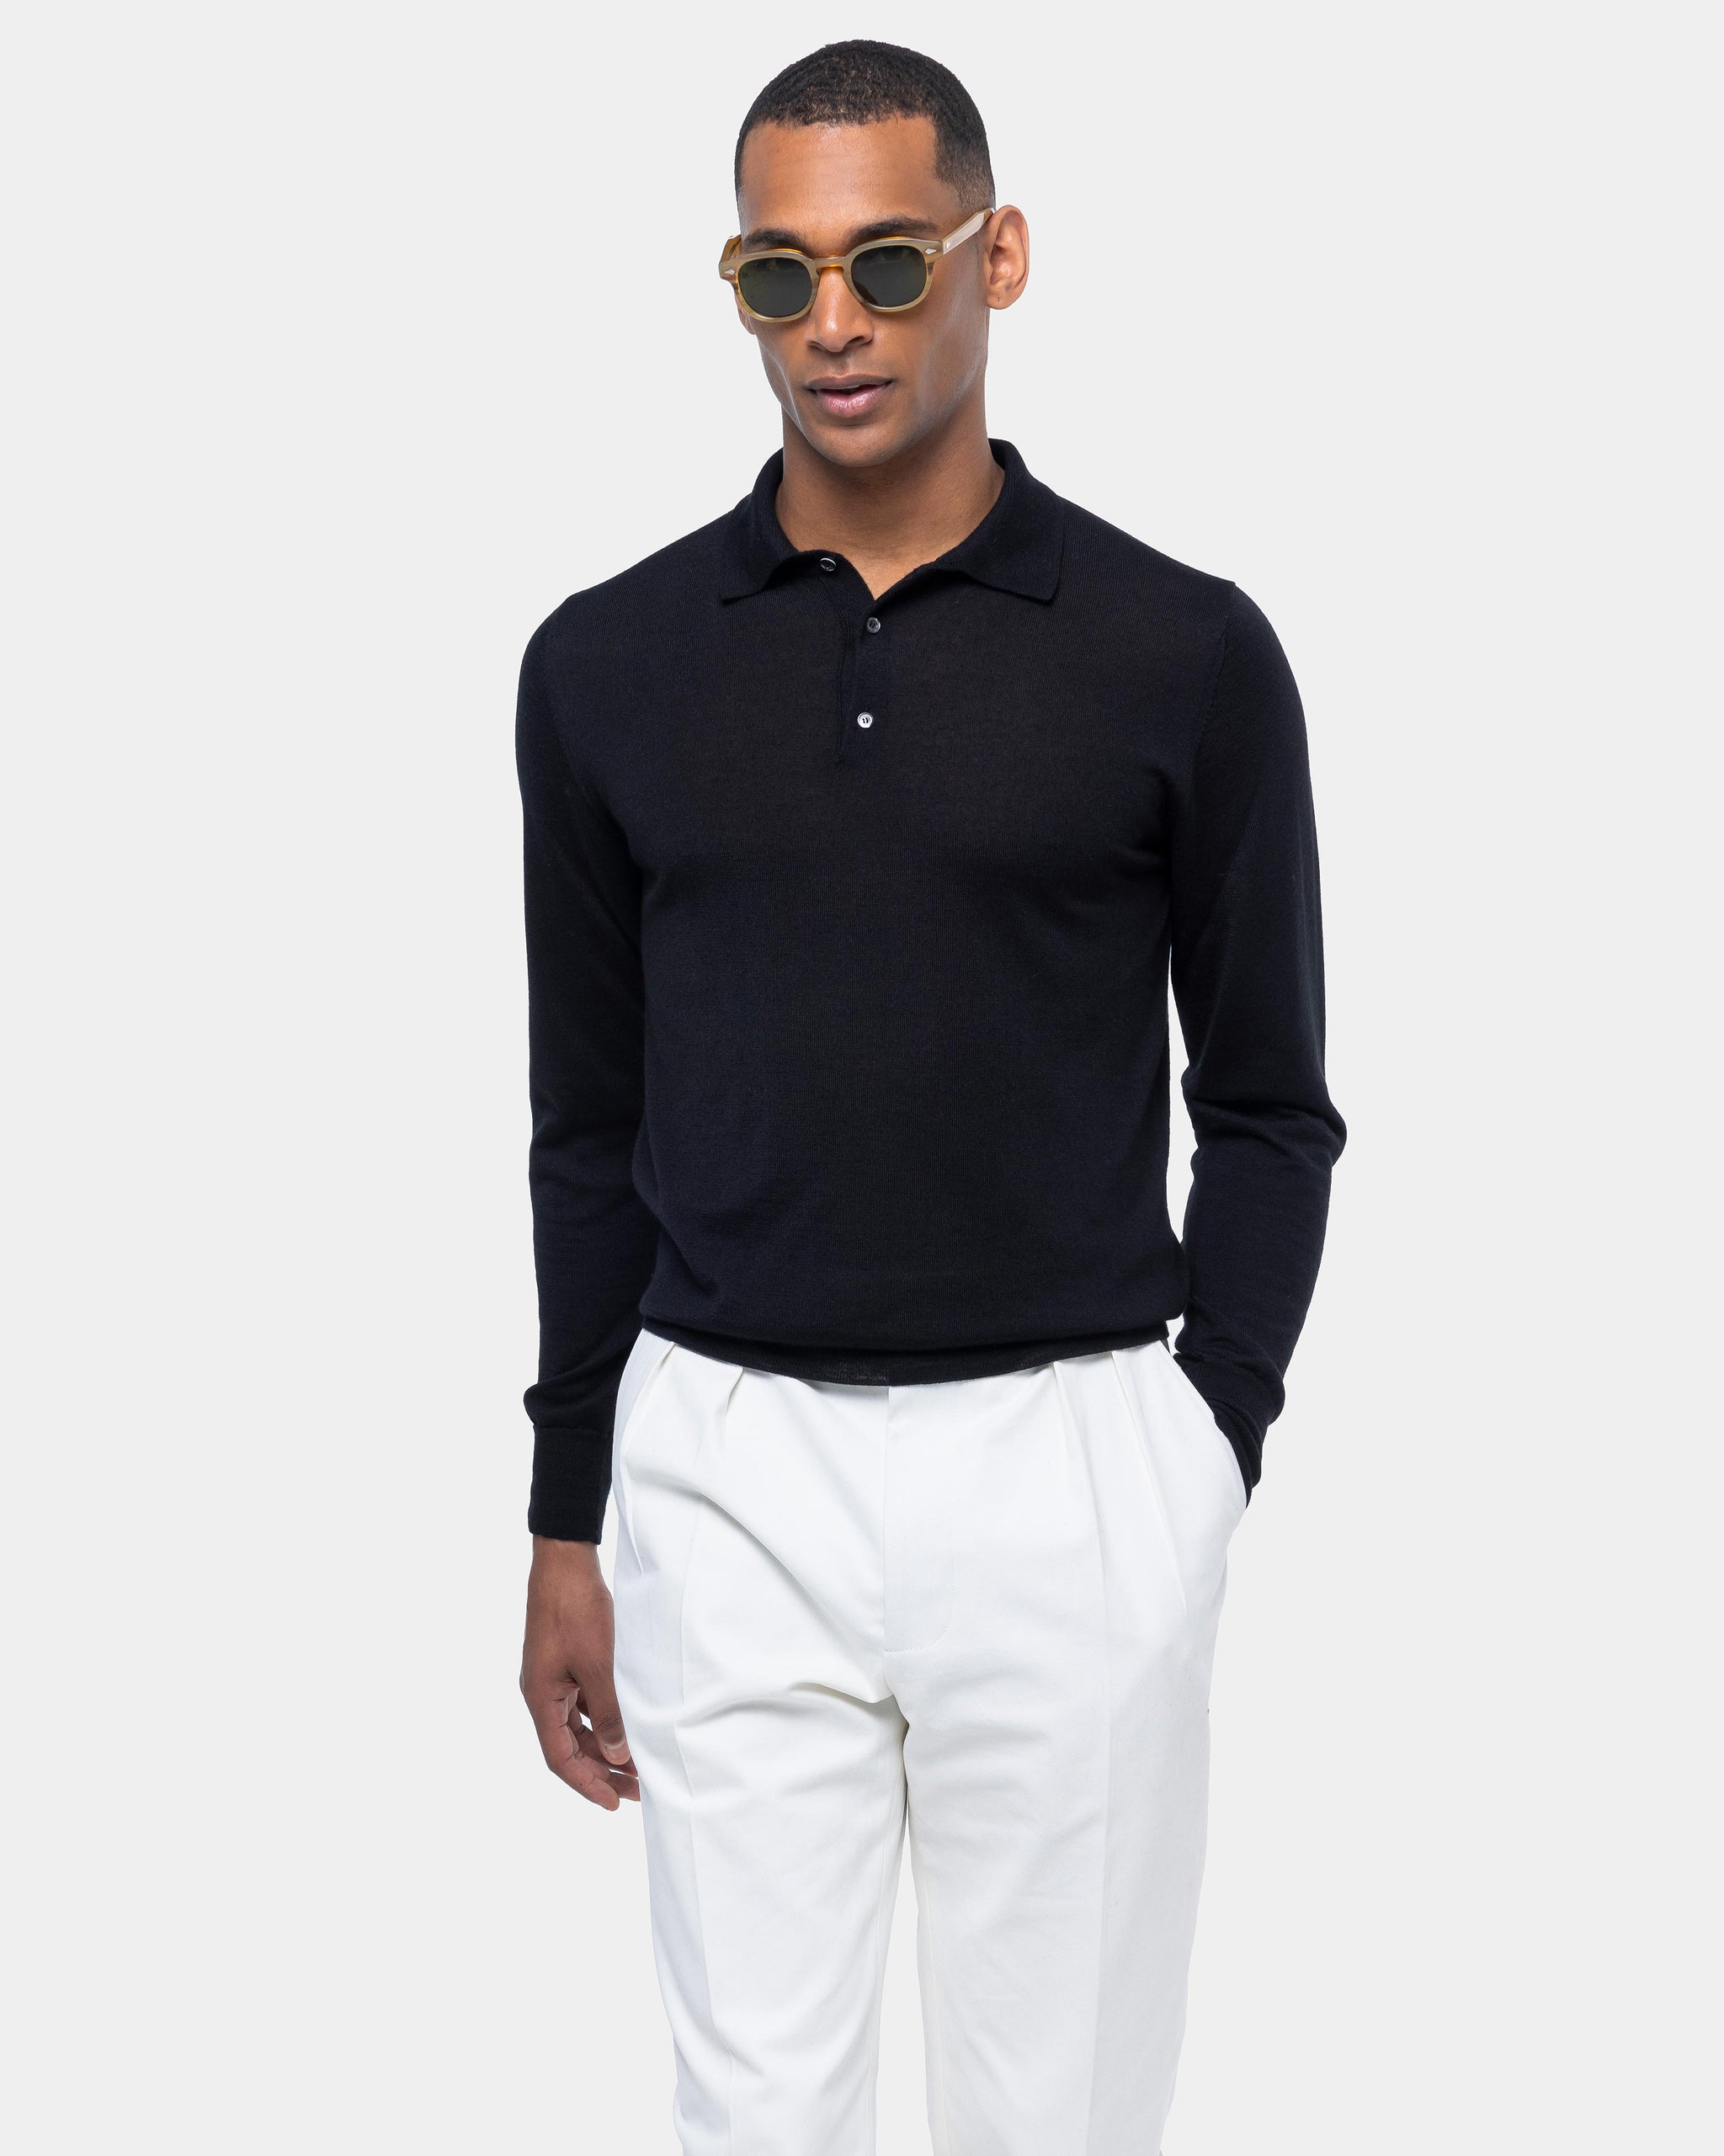 Black Long Sleeved Polo Knitwear in Cashmere Mulberry Silk | Filatori